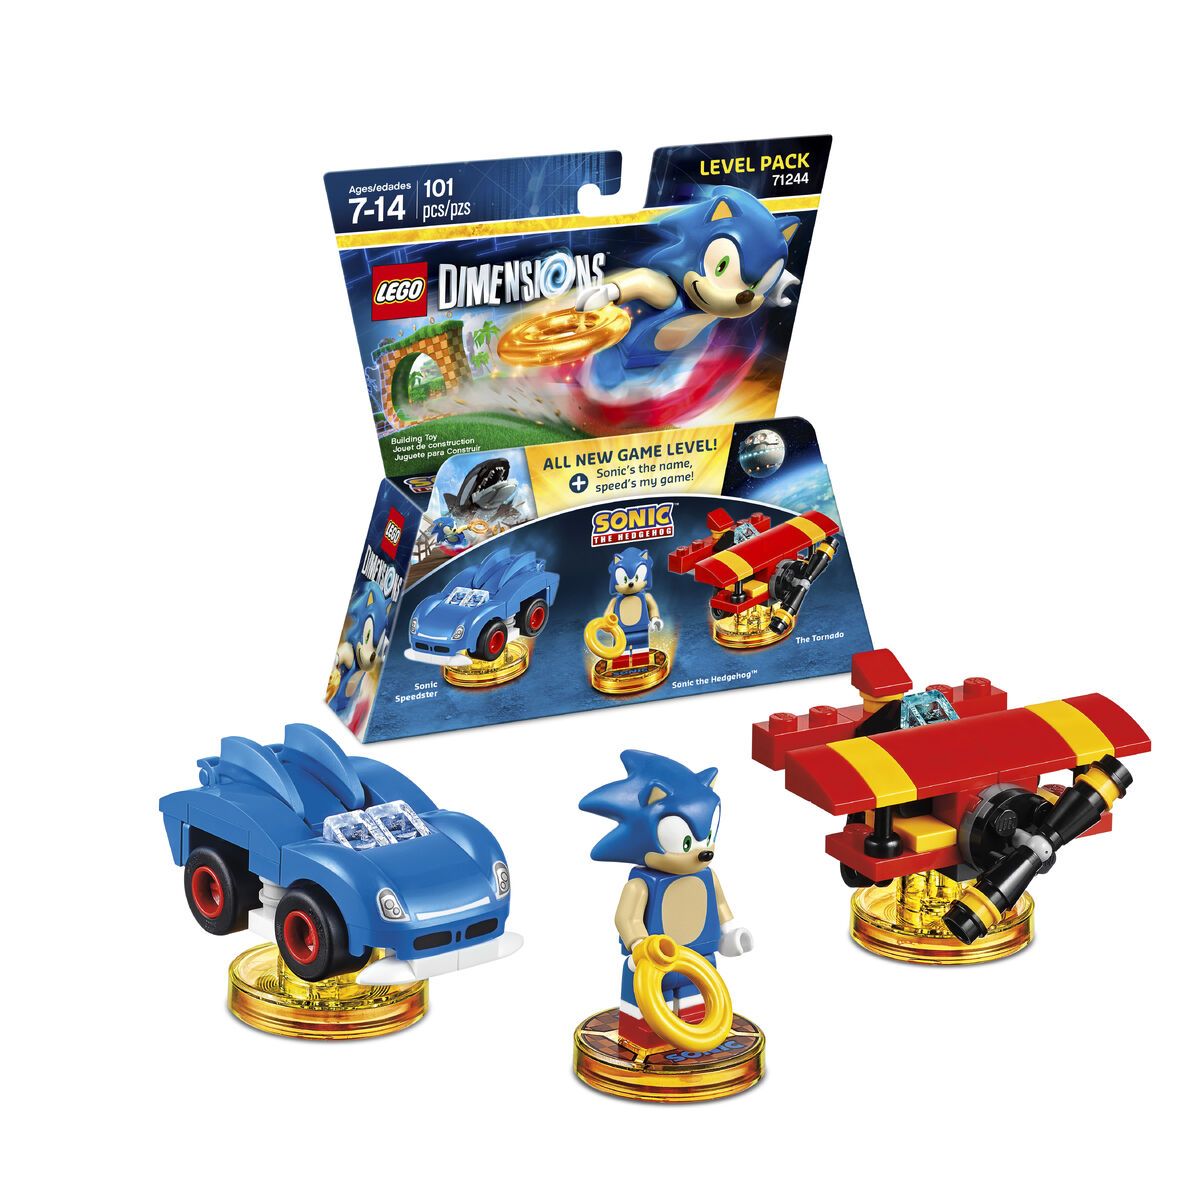 Sonic the Hedgehog, LEGO Dimensions Wiki